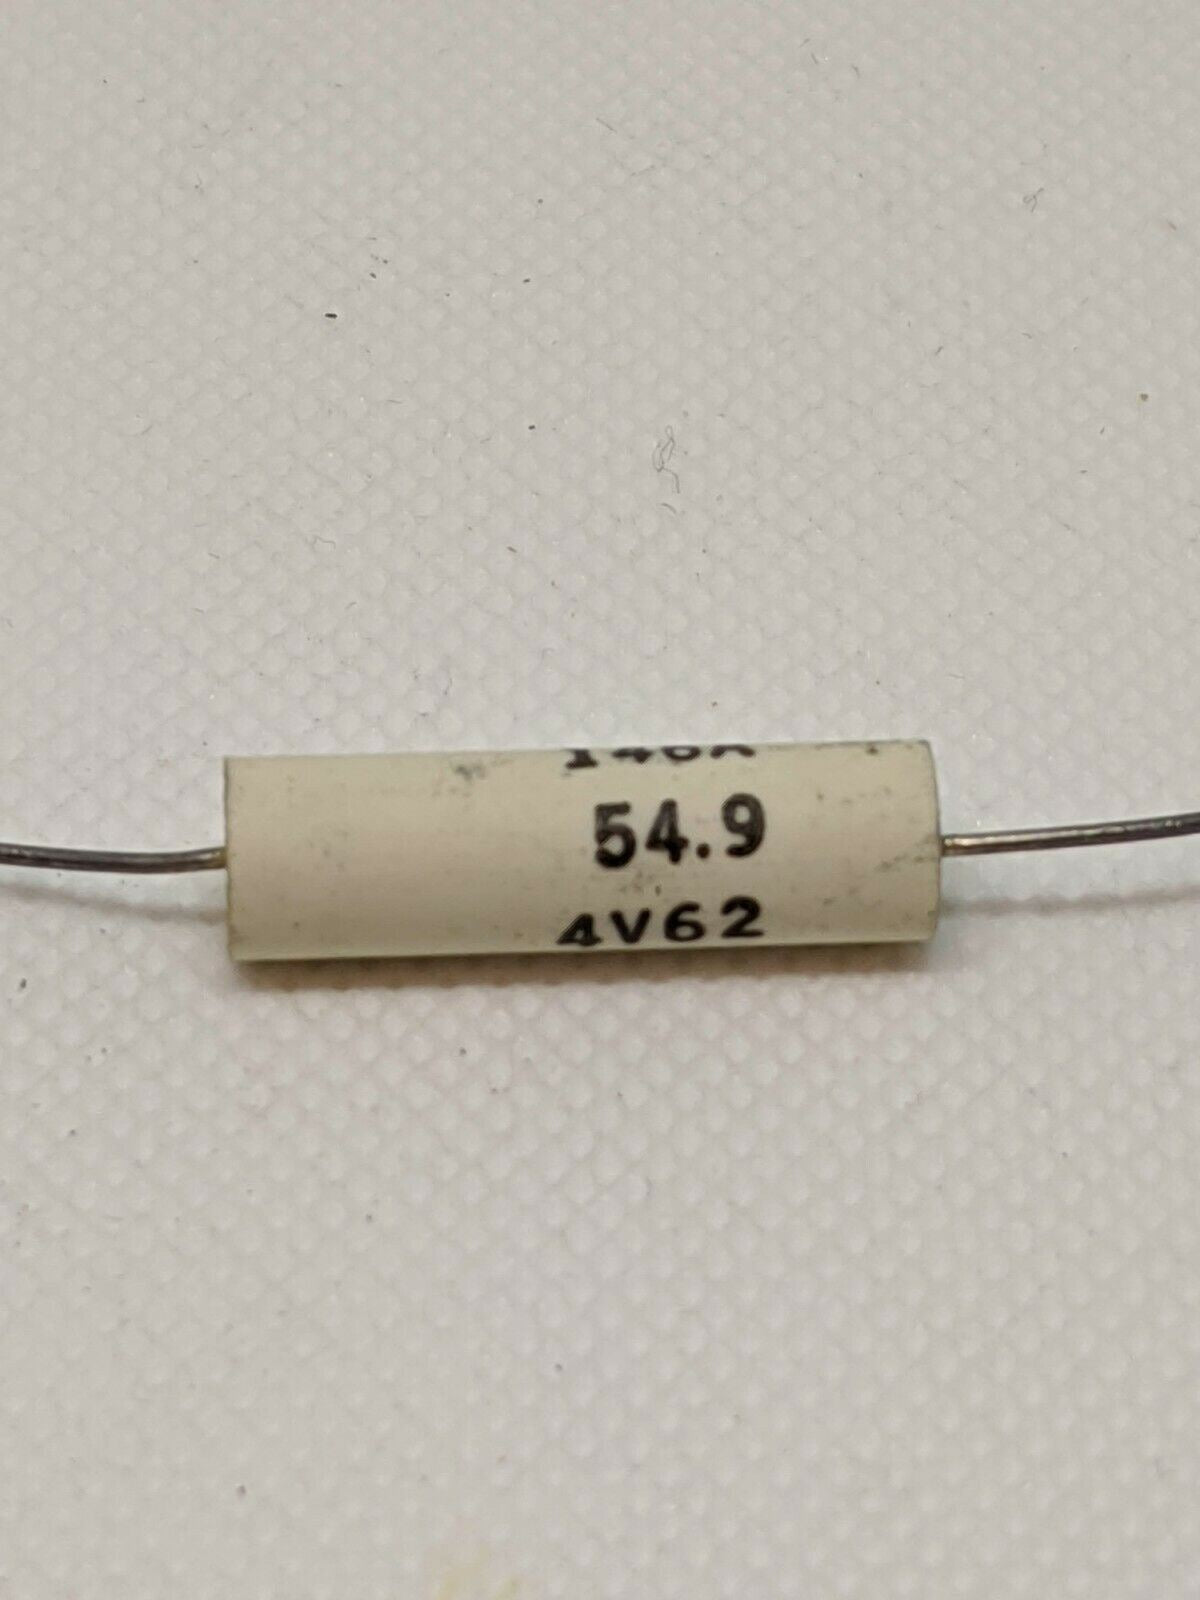 54.9 Ohm Western Electric Resistor, NOS, 1 Pc, USA Made